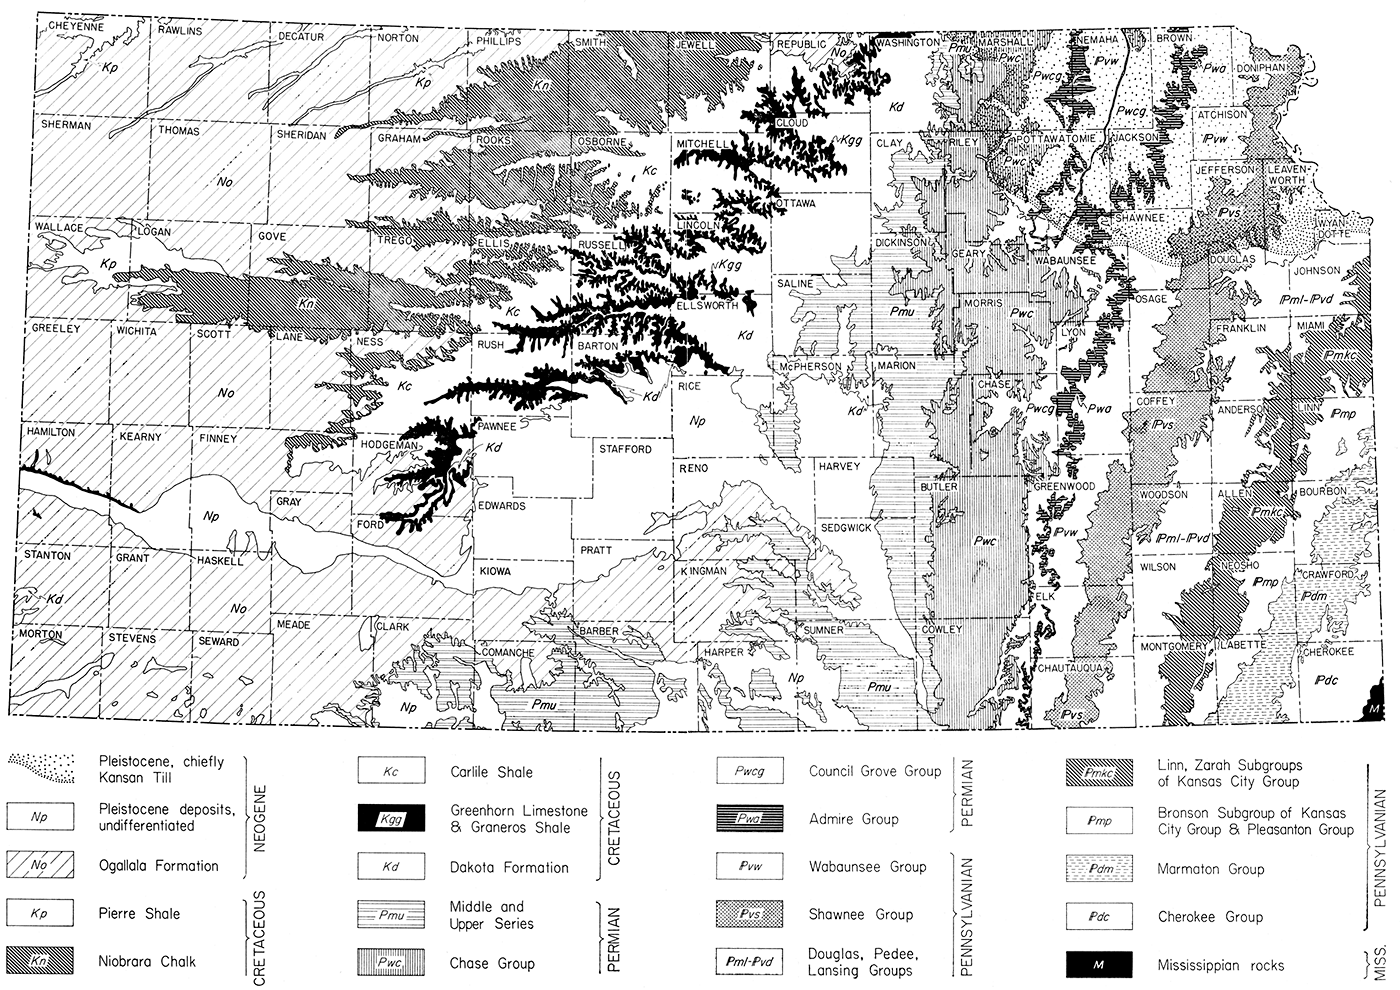 Generalized geologic map of Kansas indicating sources of building stone.